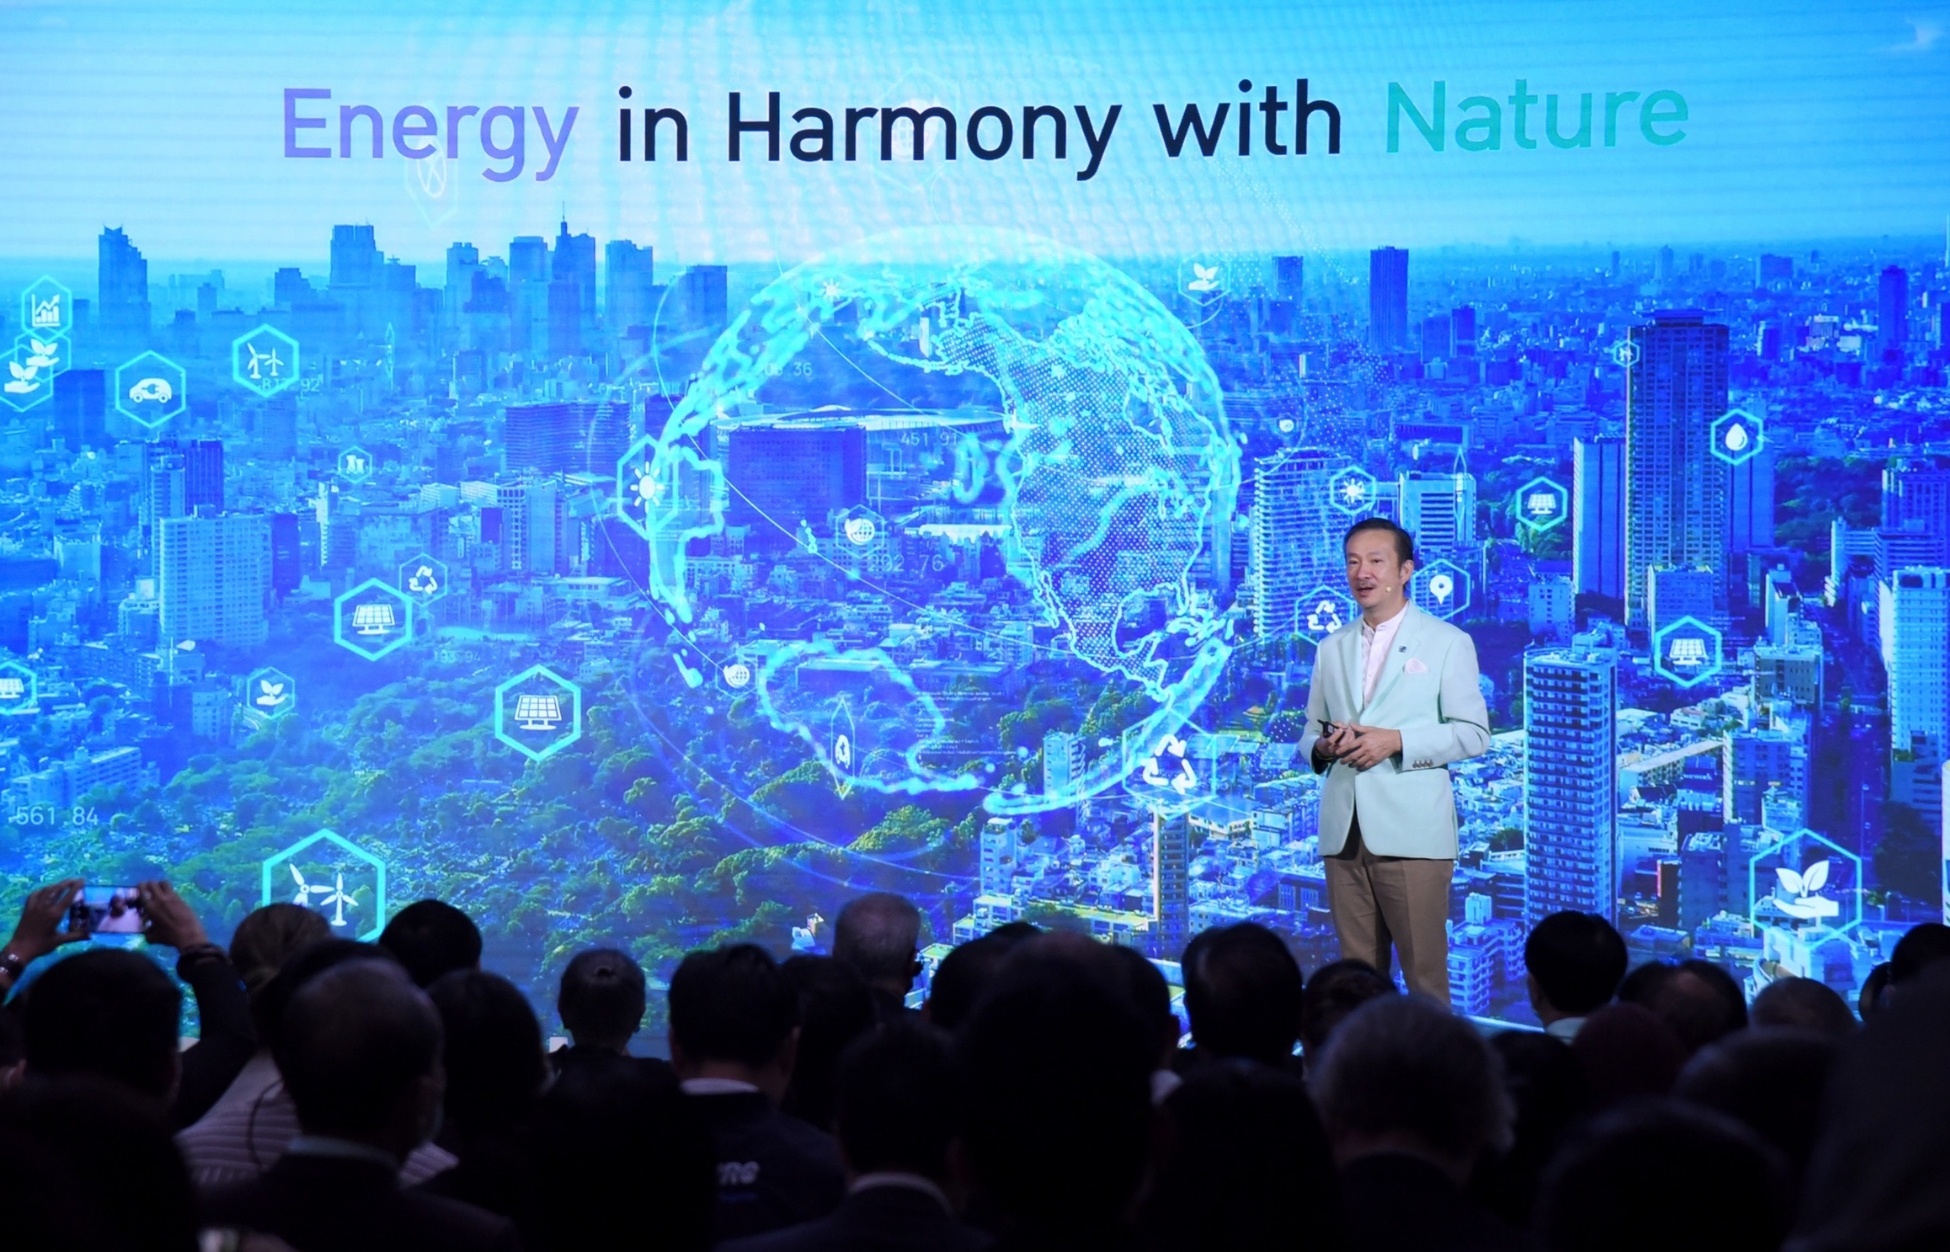 “Energy in Harmony with Nature” ความมั่นคงด้านพลังงานและการดูแลโลกให้ยั่งยืน